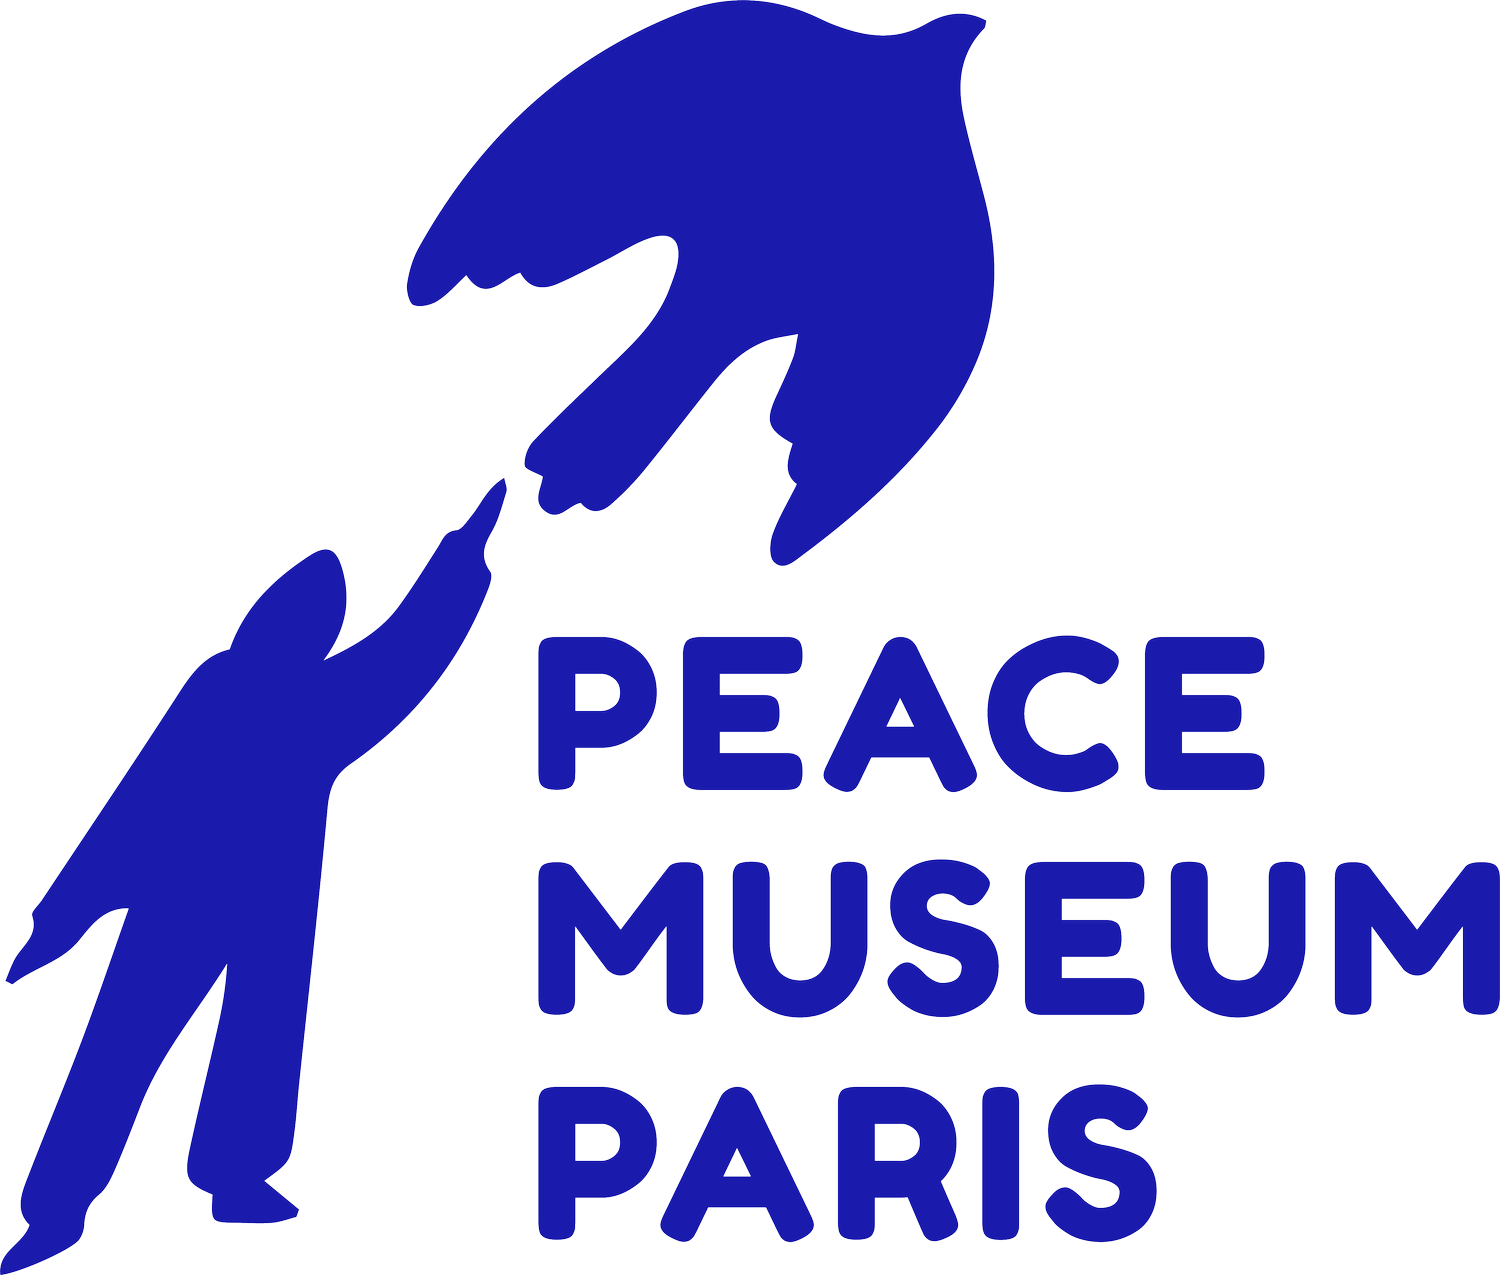 PEACE MUSEUM PARIS